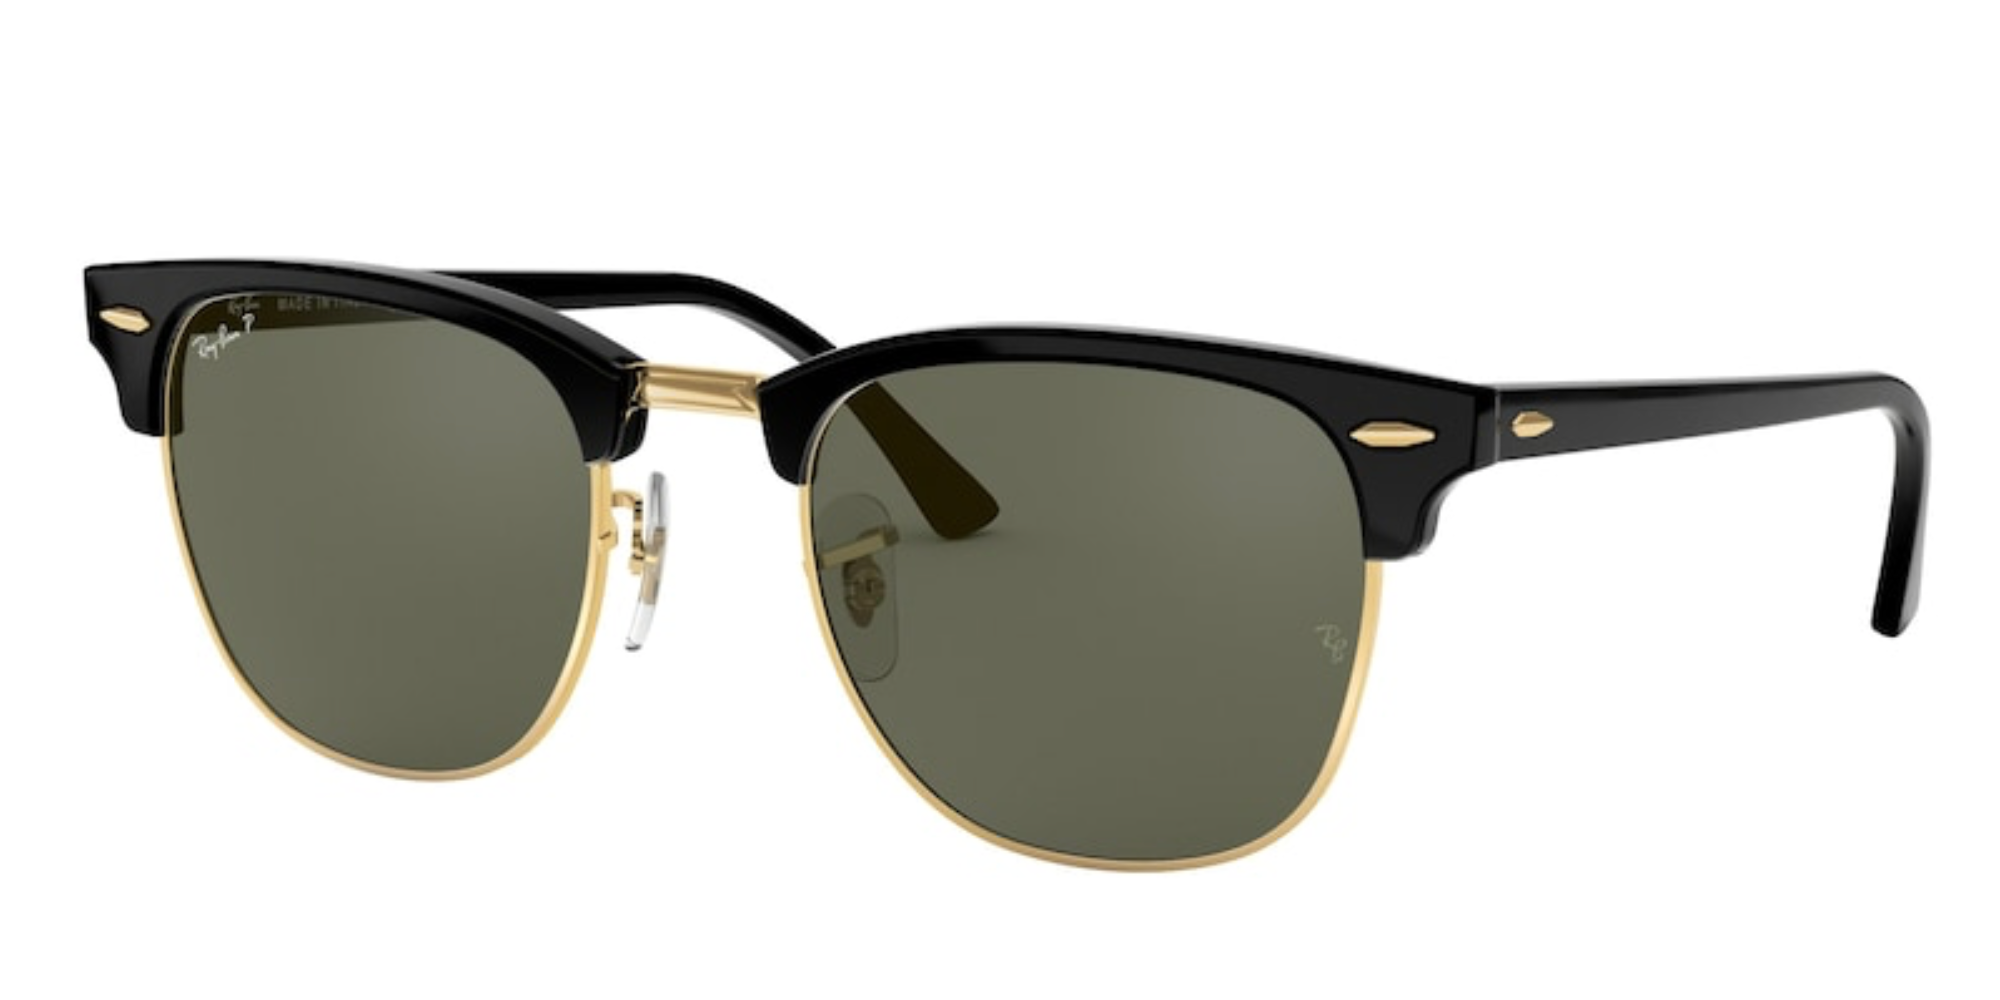 Ray-Ban Clubmaster 3016 - Flight Sunglasses